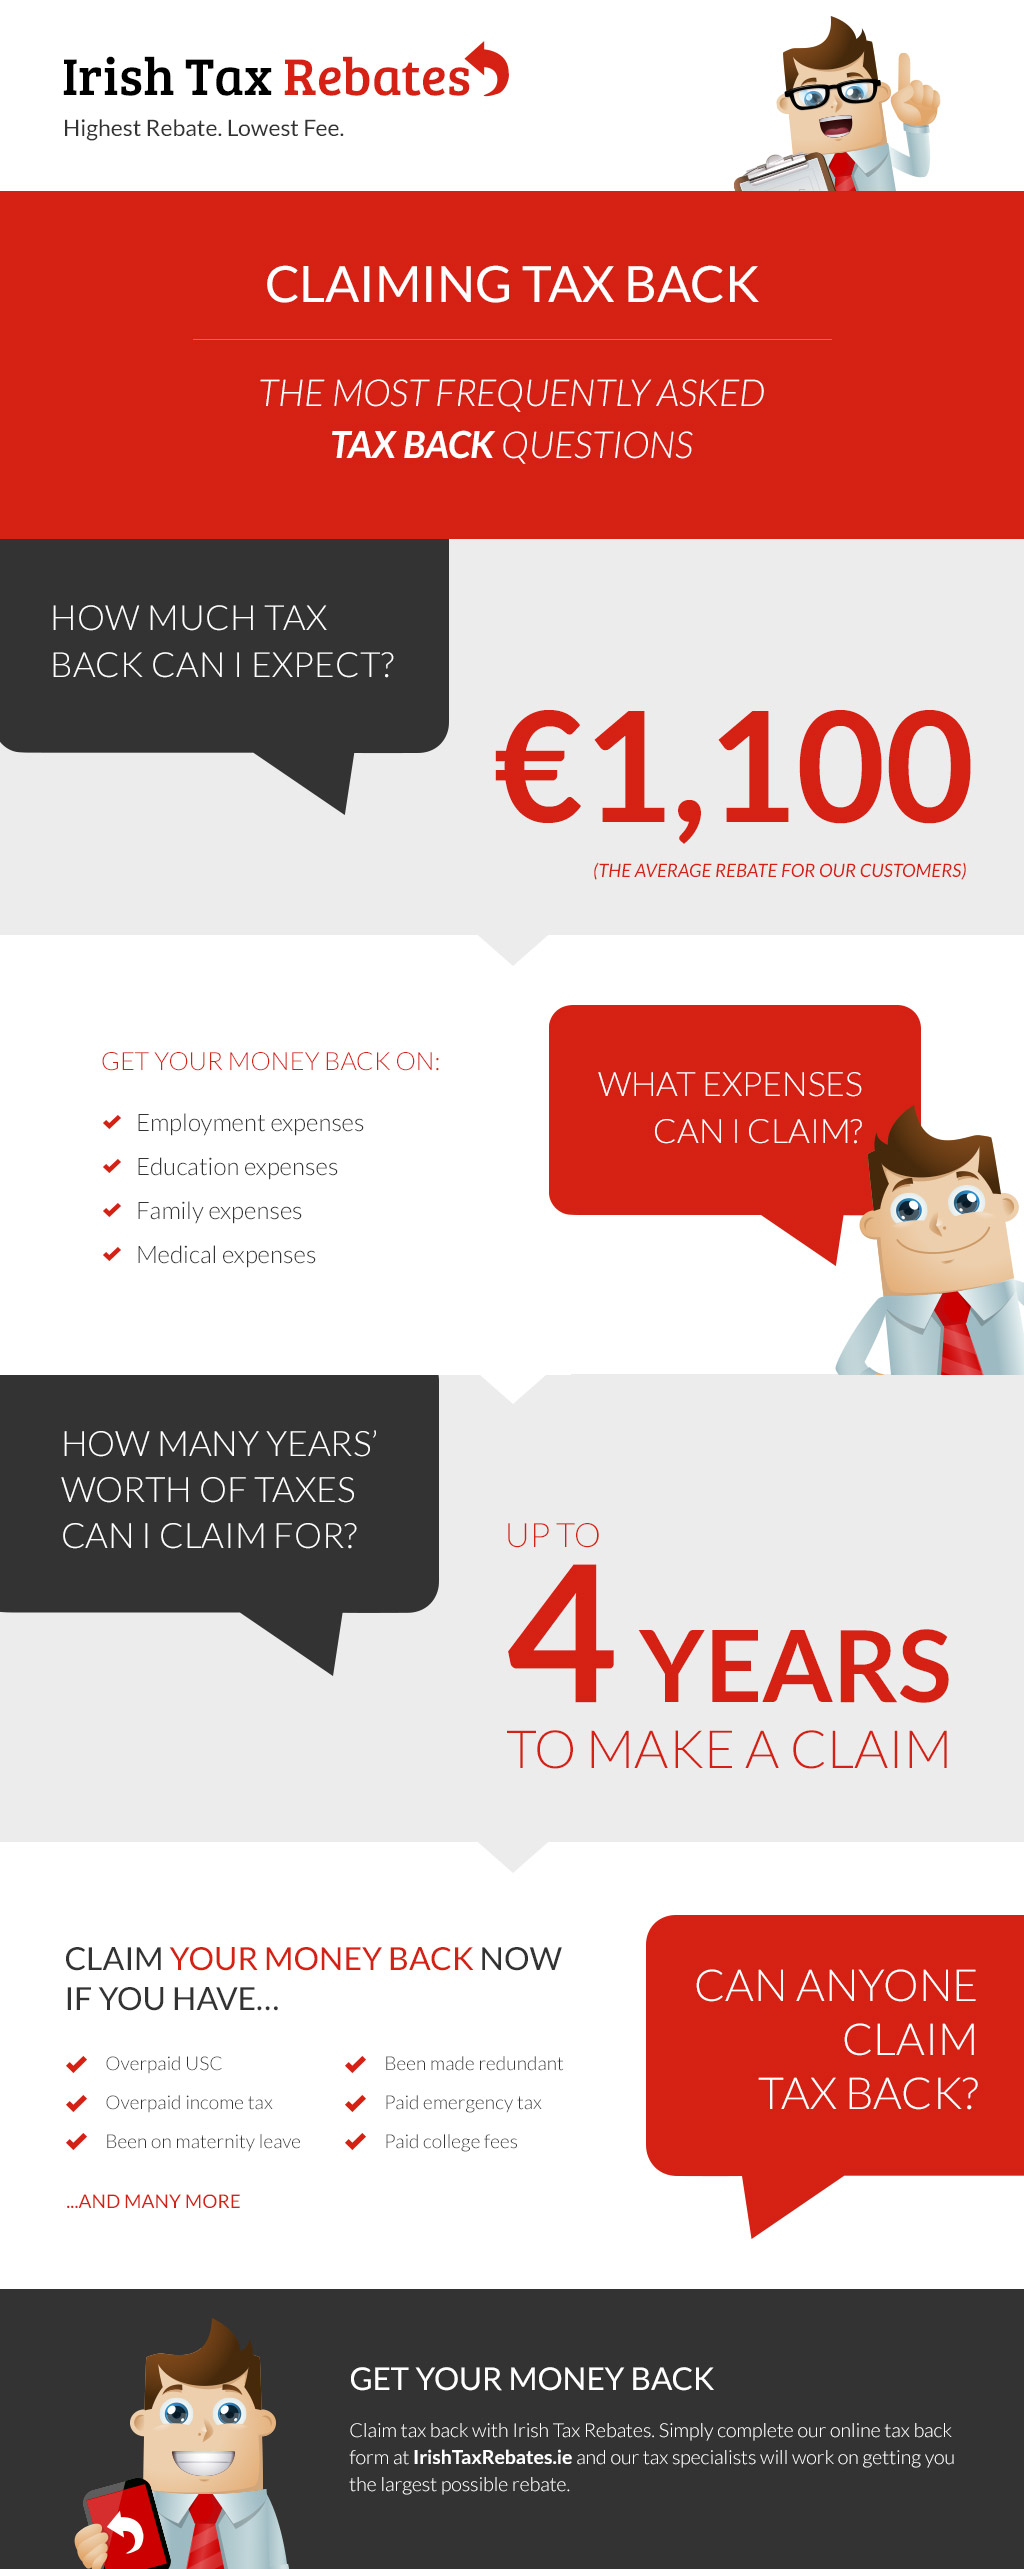 how-to-claim-tax-back-for-dental-expenses-irish-tax-rebates